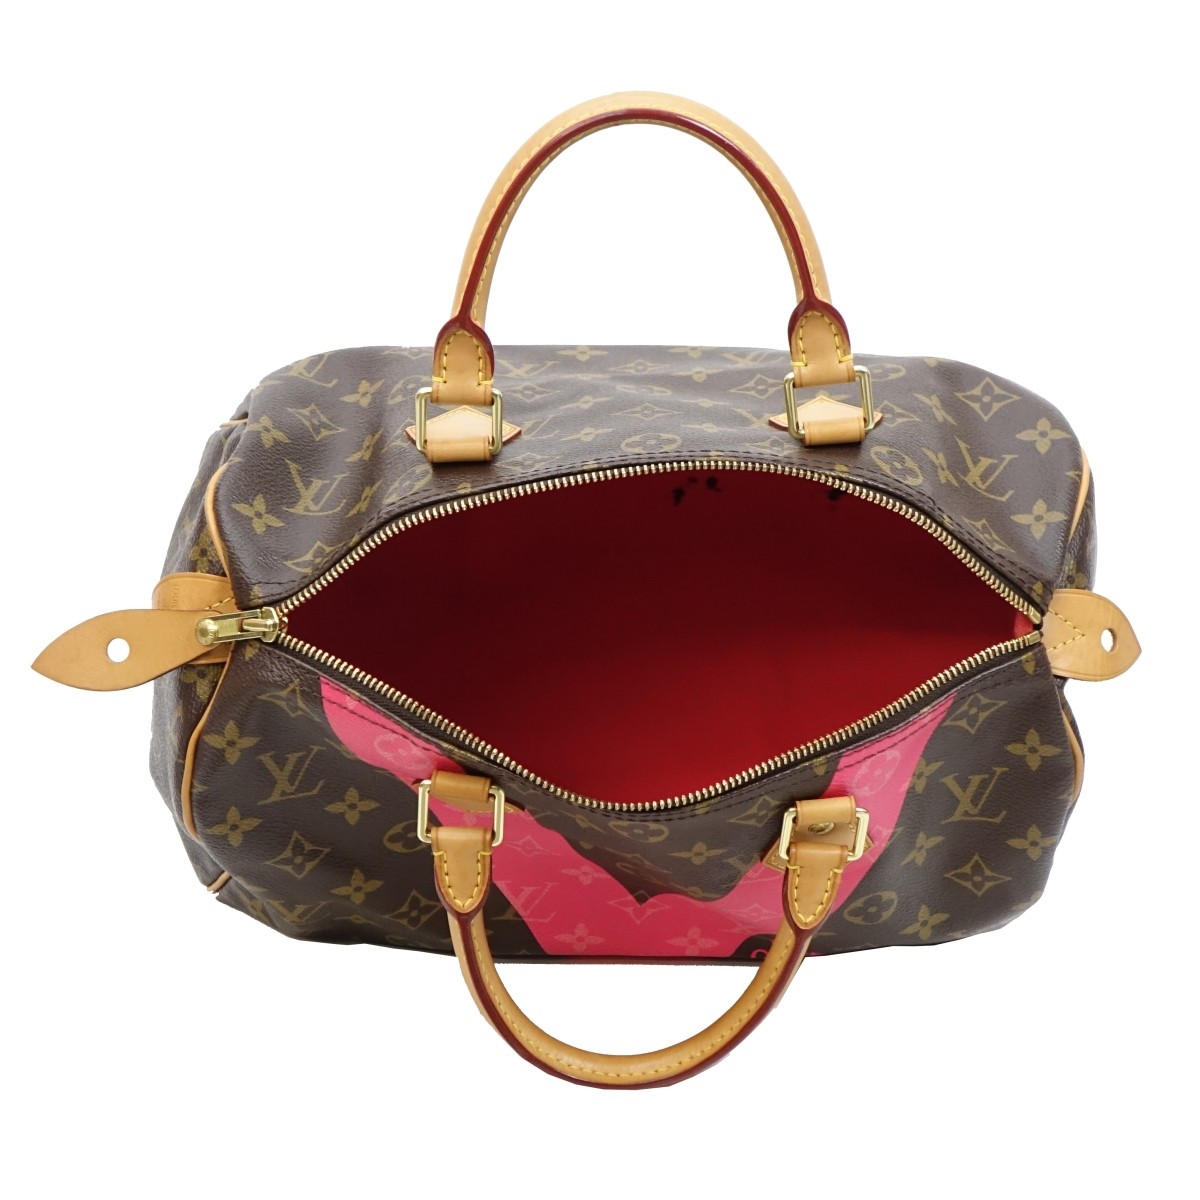 Sold at Auction: Louis Vuitton Brown Speedy Satchel Bag